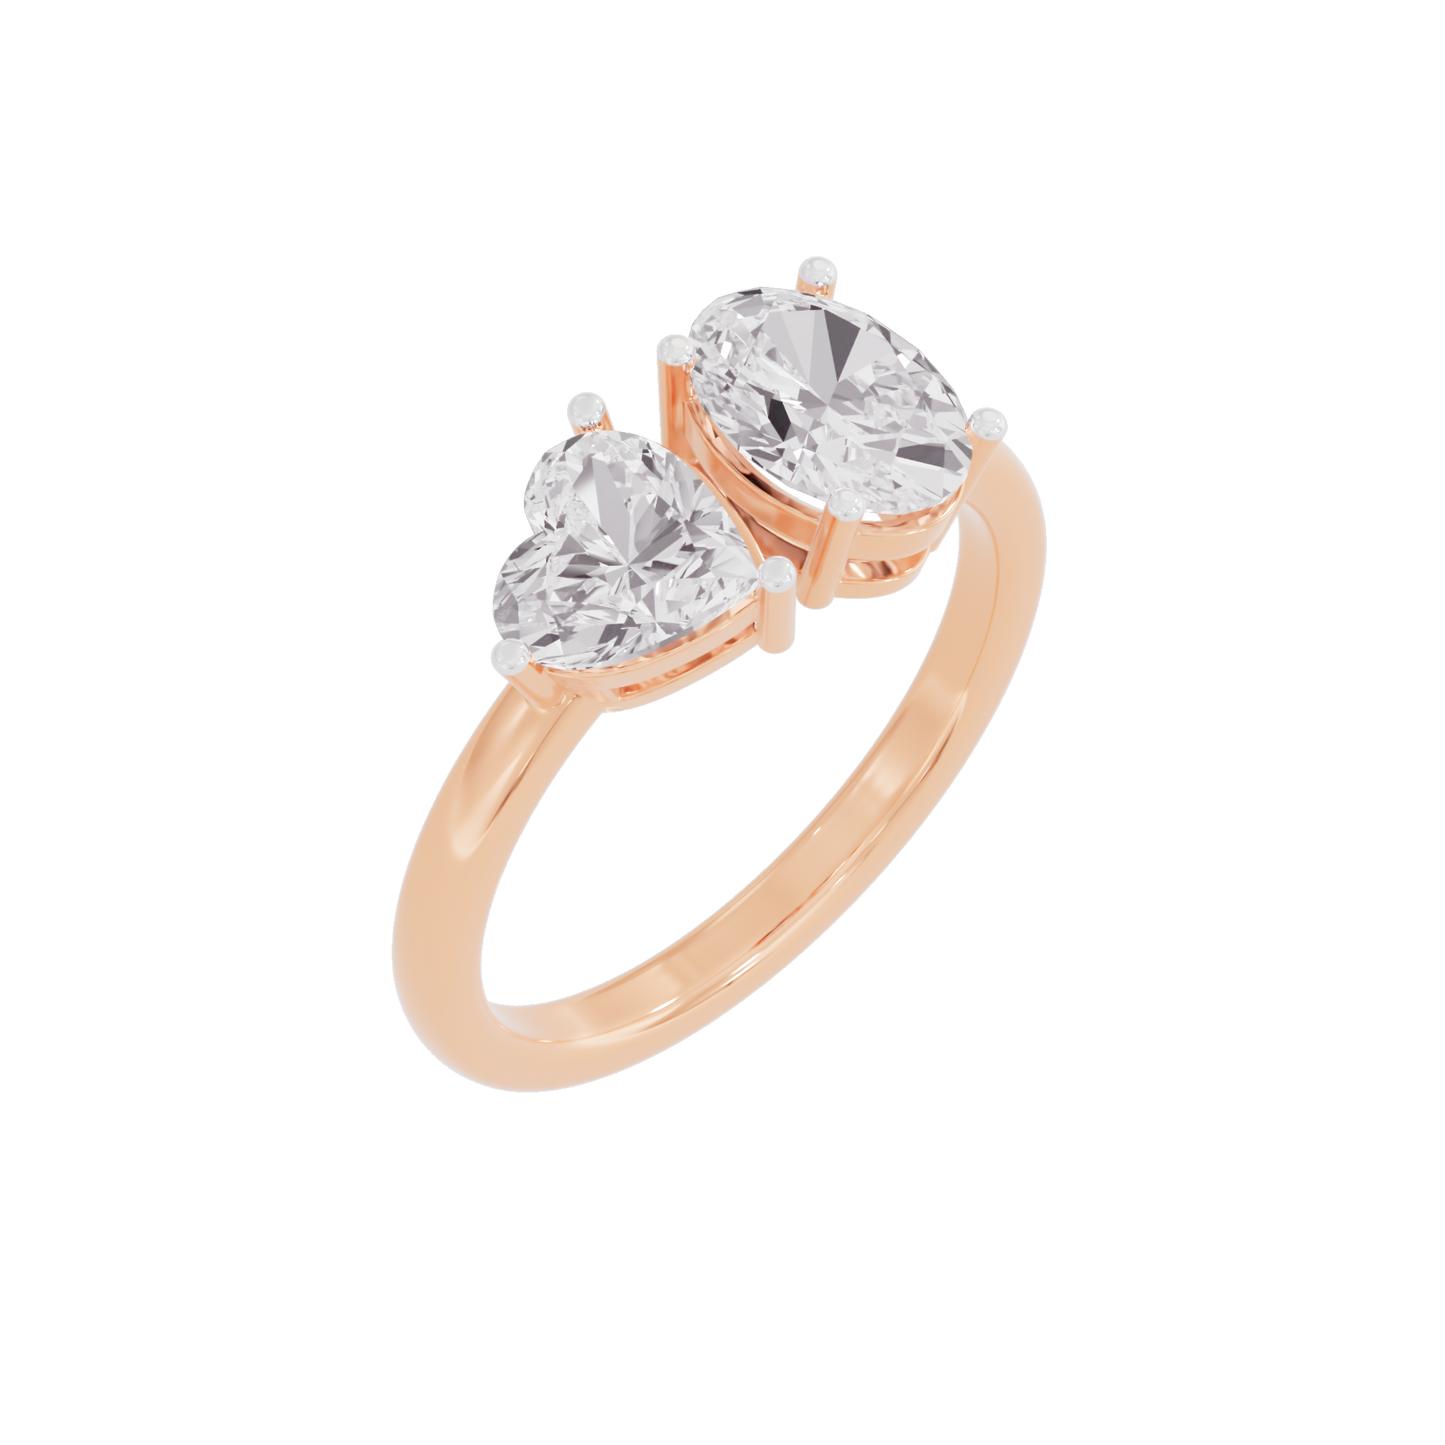 Regal Splendor Diamond Ring